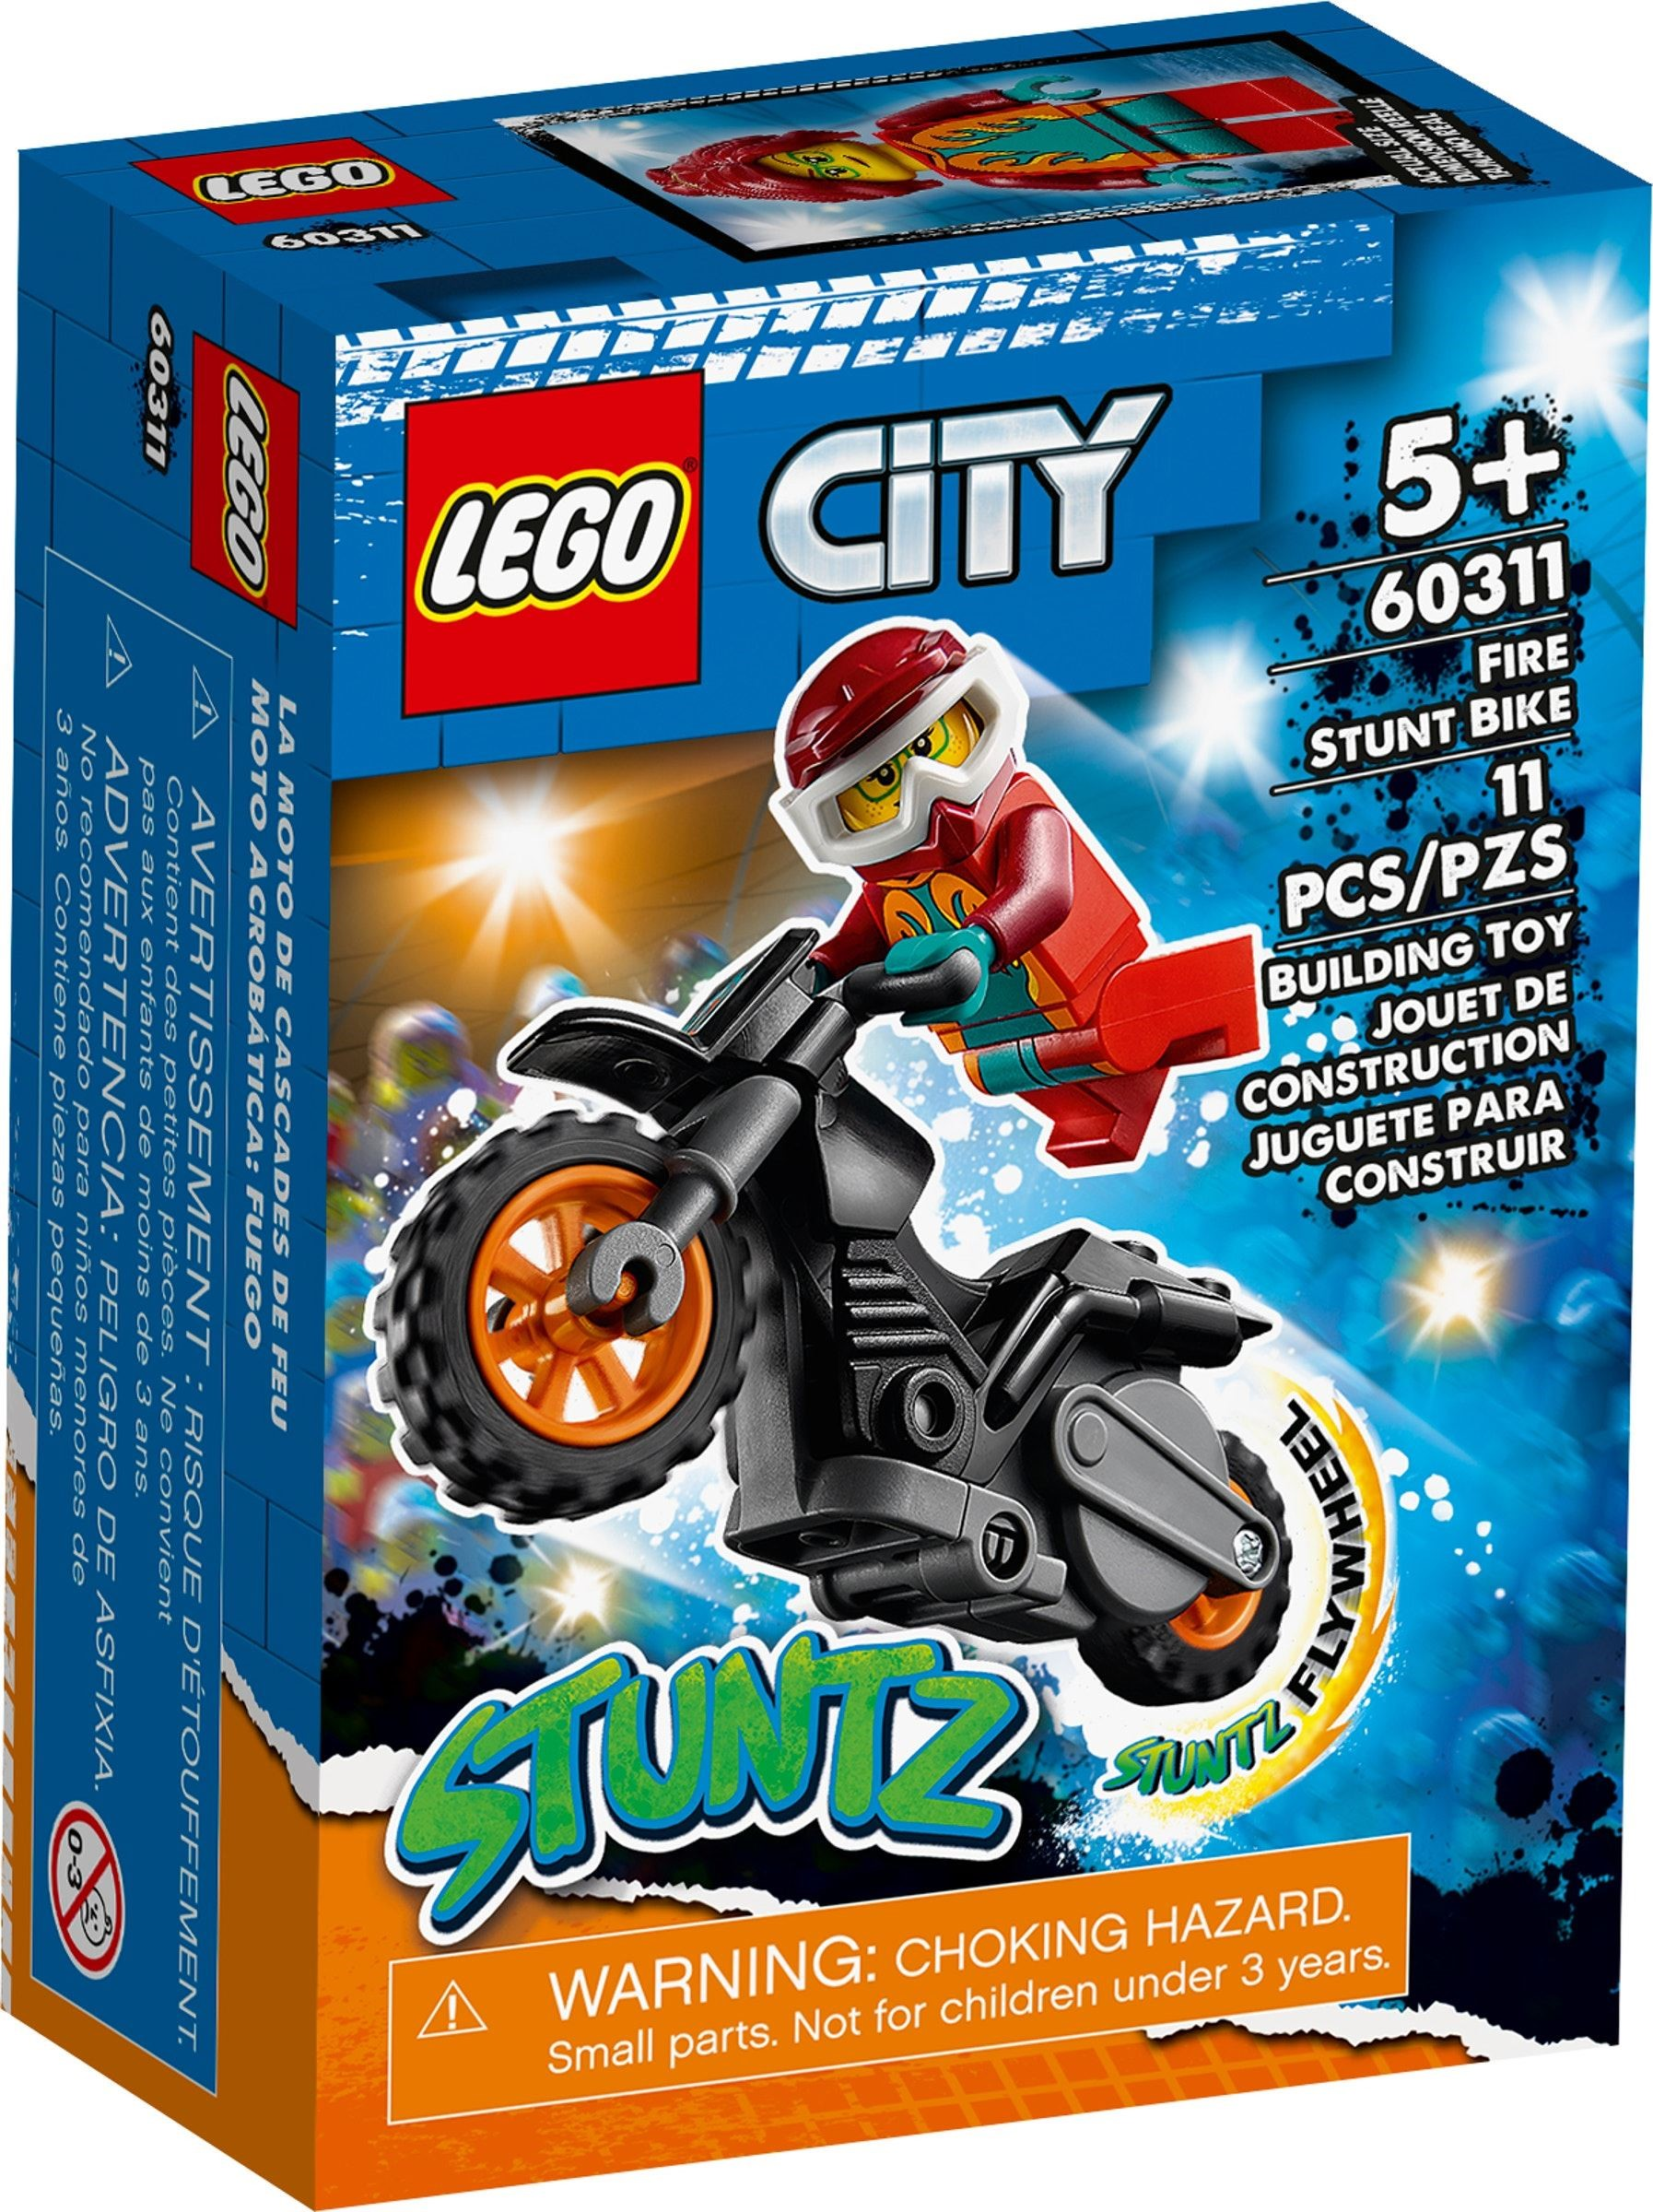 60311 Fire Stunt Bike, Lego City Adventures Wiki